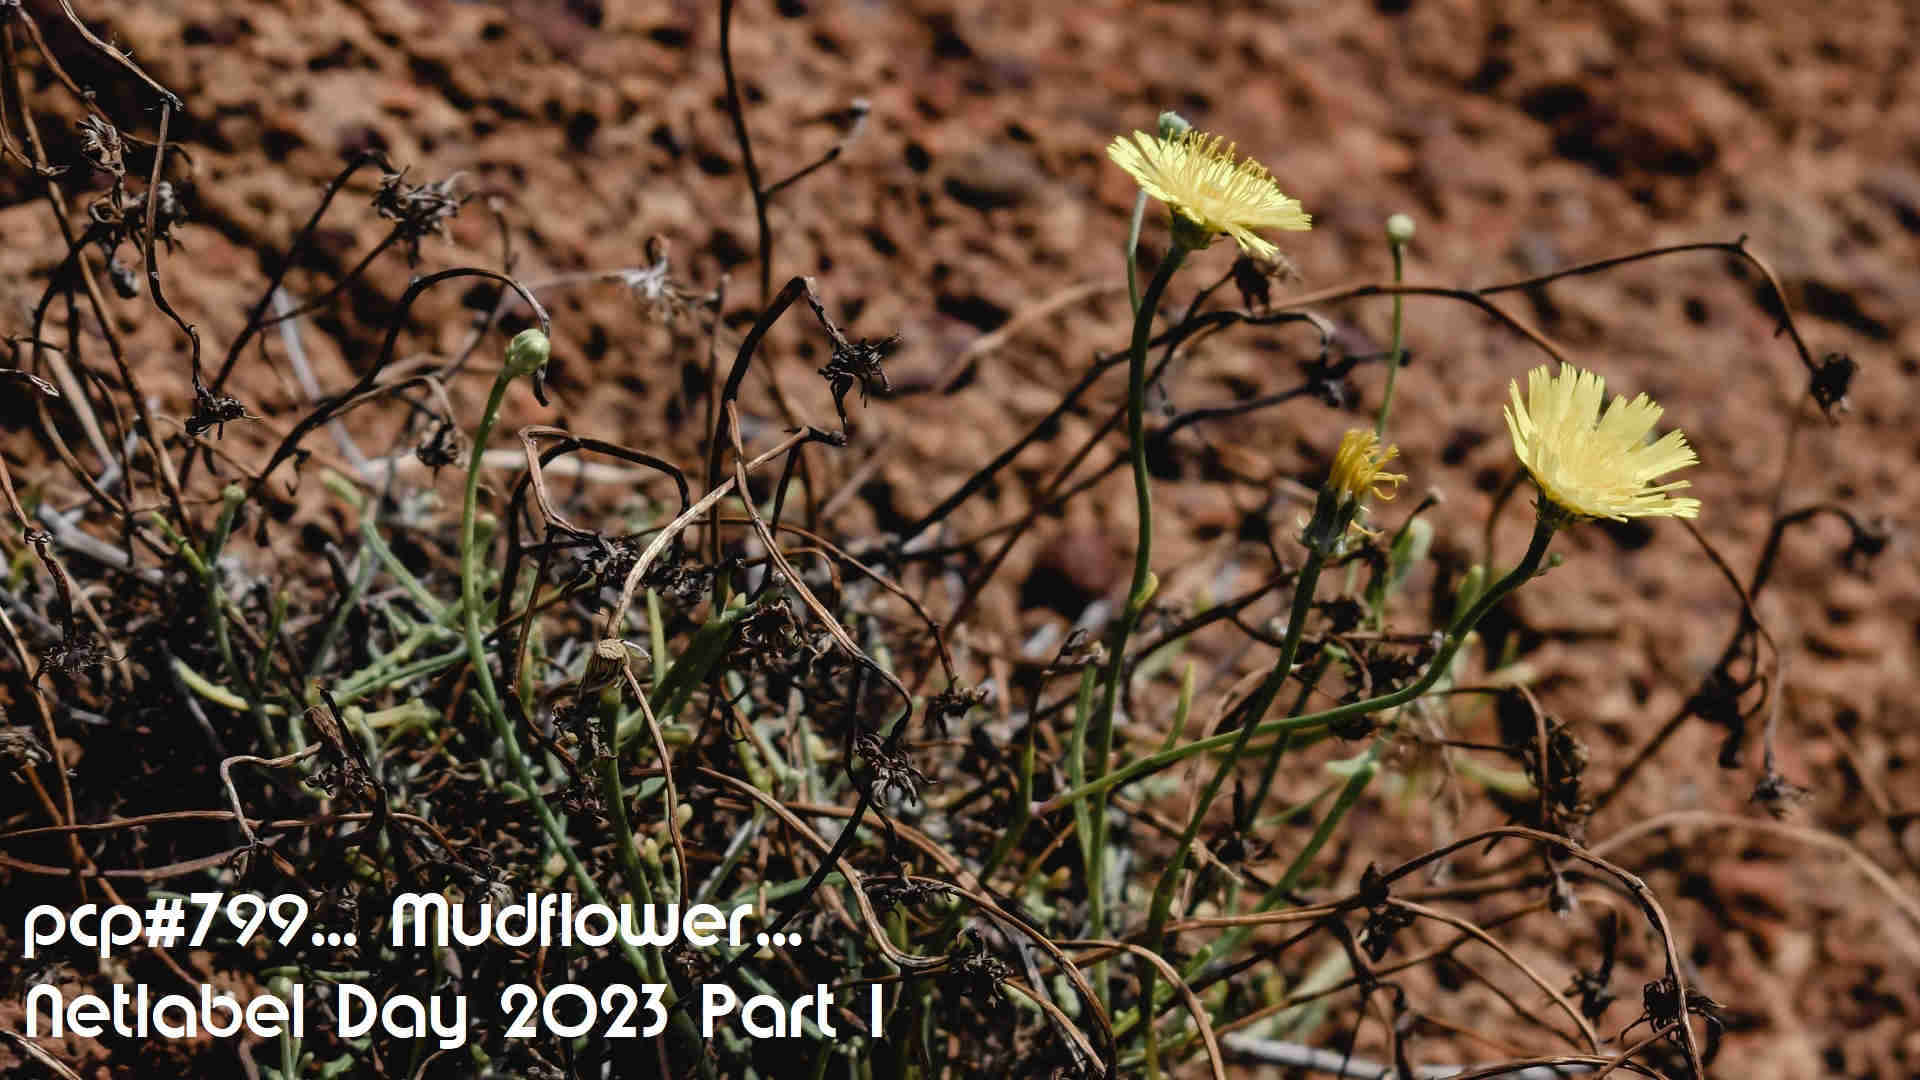 PCP#799... Mudflower...Netlabel Day 2023 Part 1...